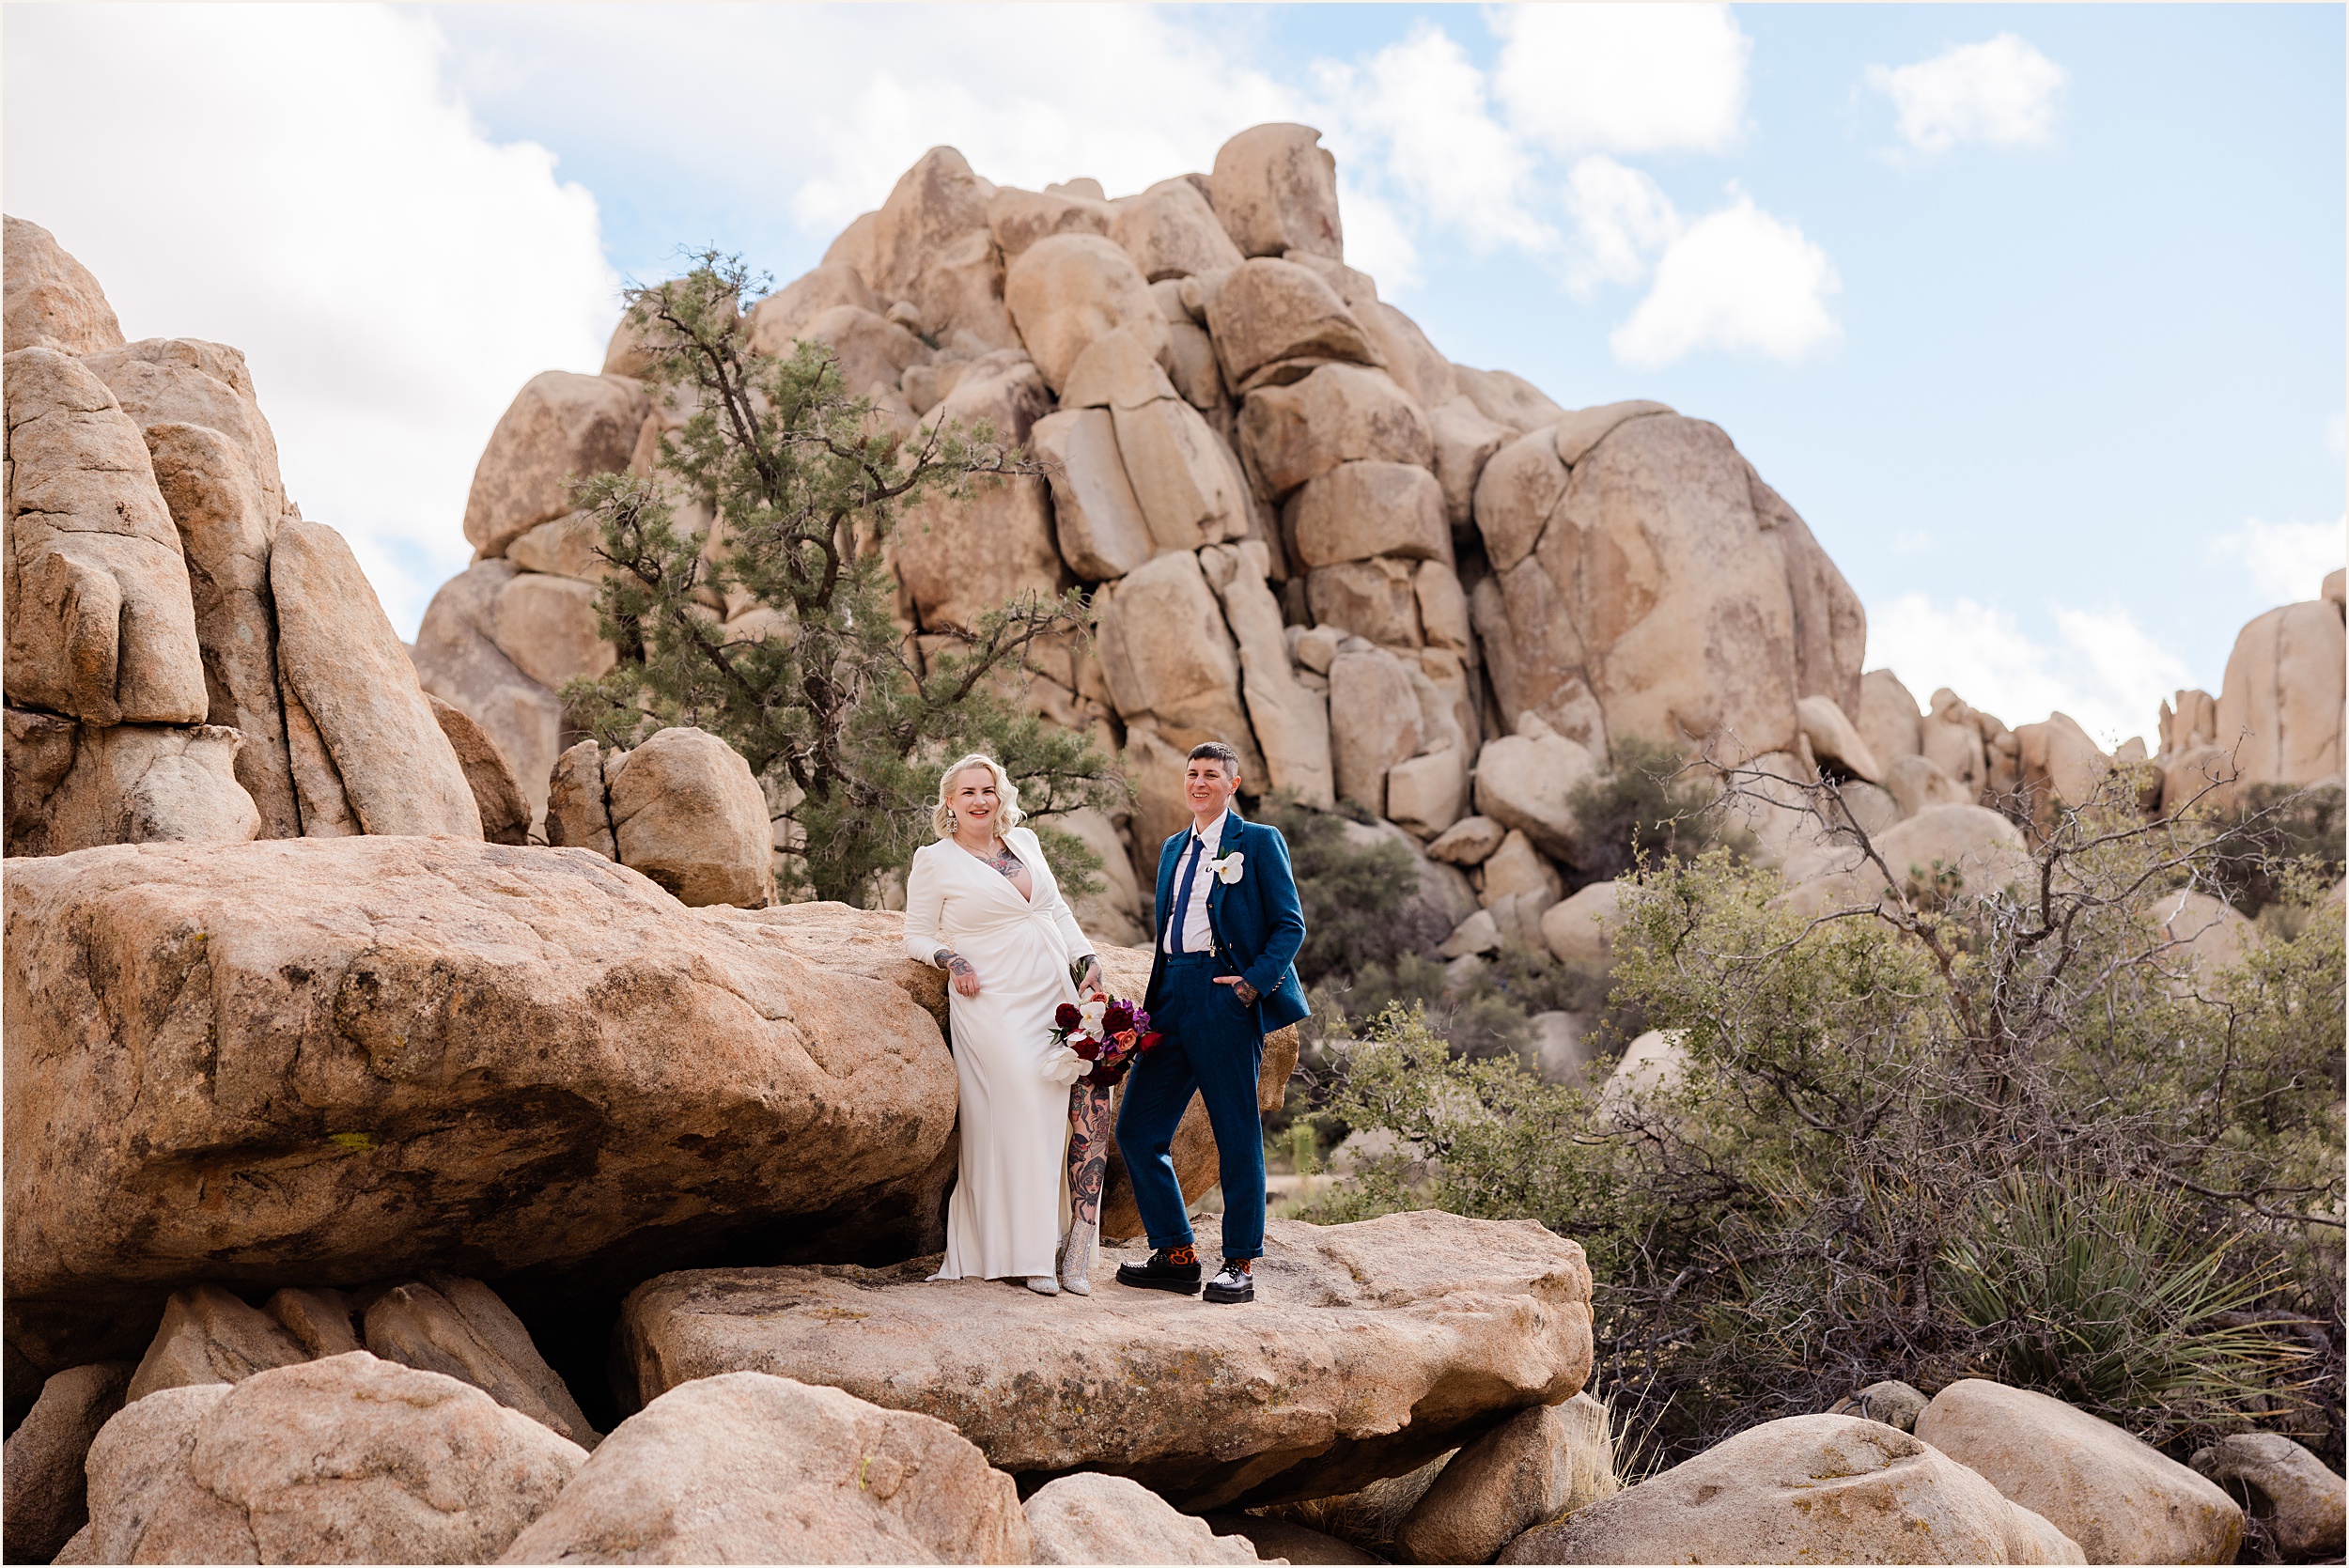 LGBT-Friendly-Wedding-Venues_0065 Katy & Oli's Desert Elopement in Joshua Tree